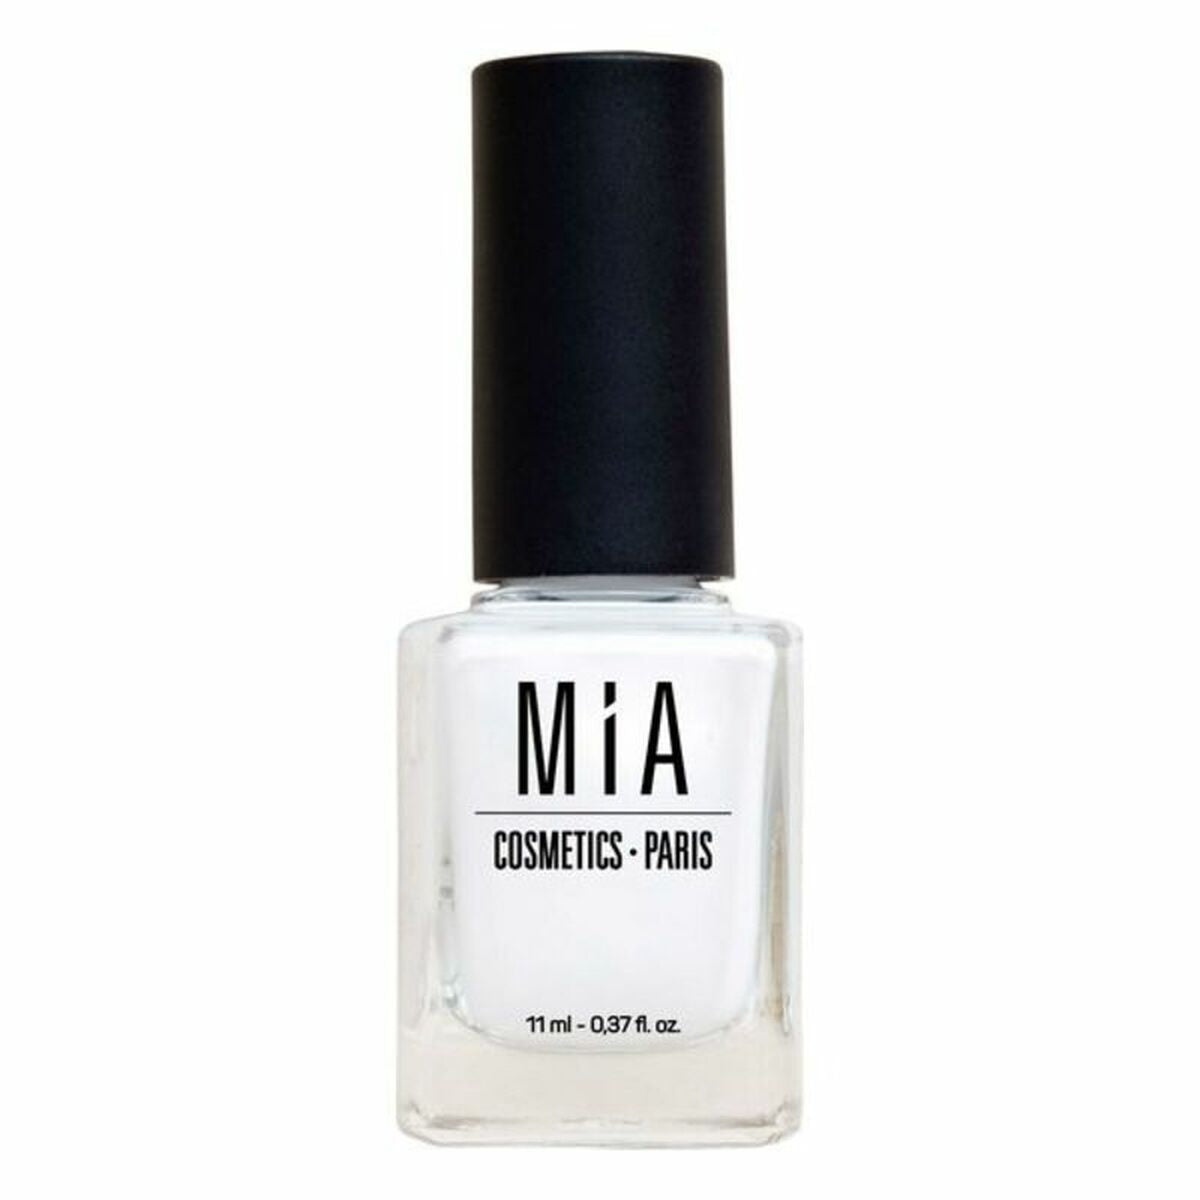 Nail polish Mia Cosmetics Paris Frost White (11 ml) - Calm Beauty IE